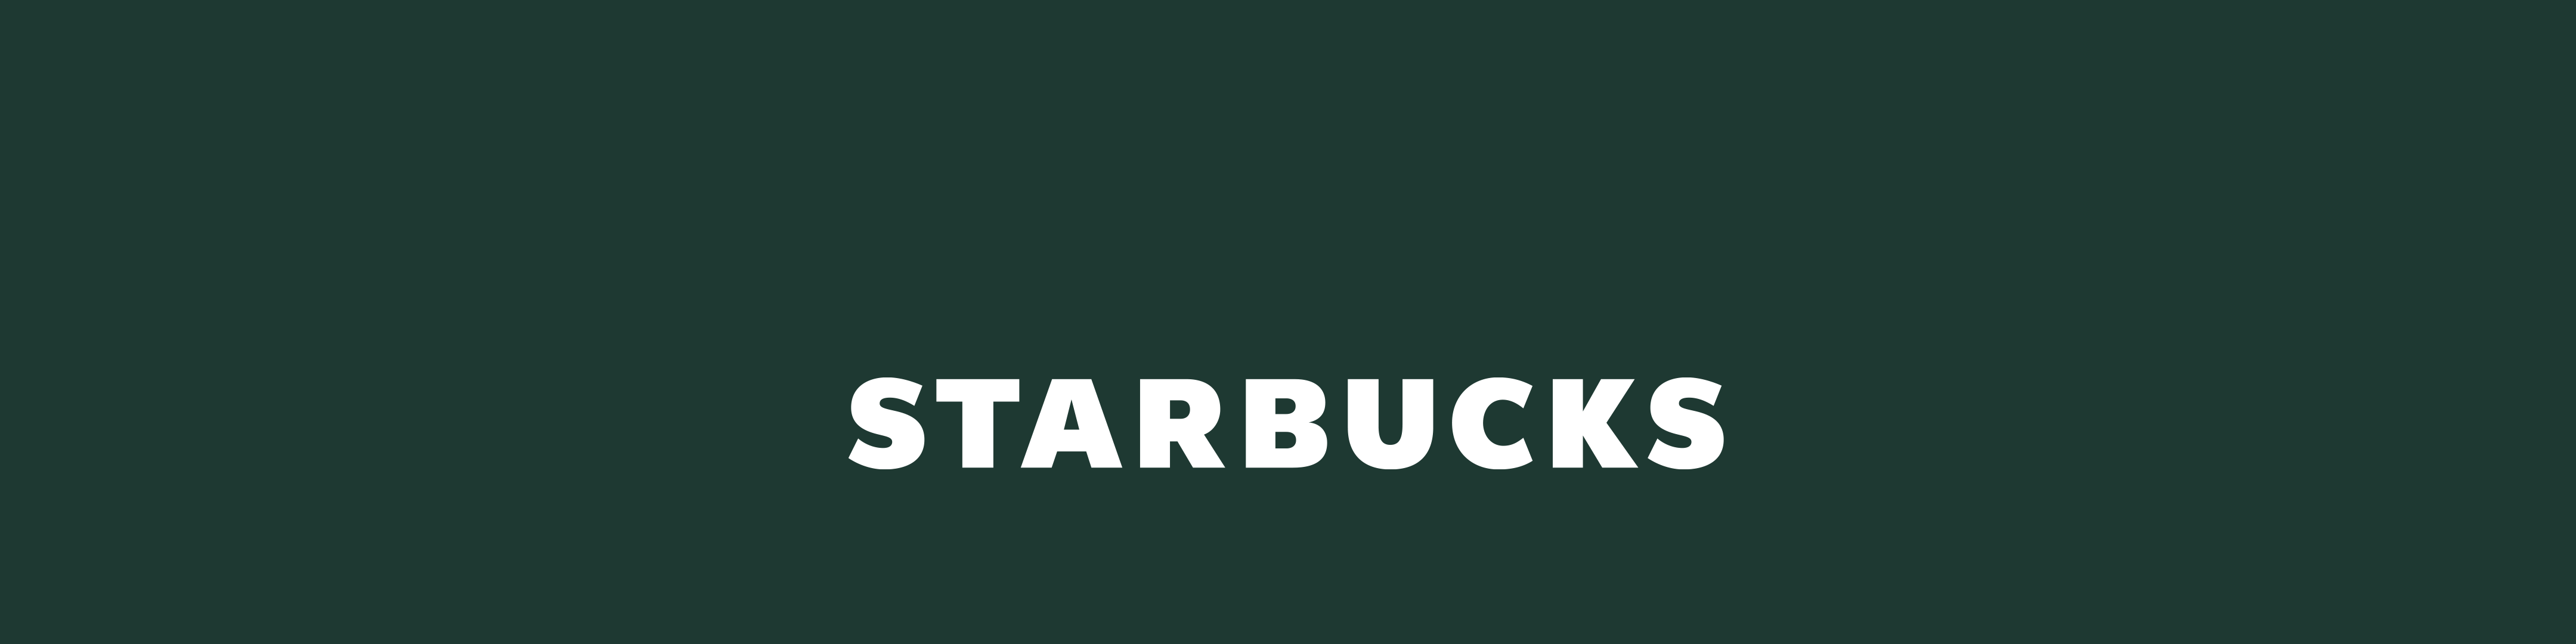 Starbucks Overview Apple App Store Us - roblox games undertale sbux company financials